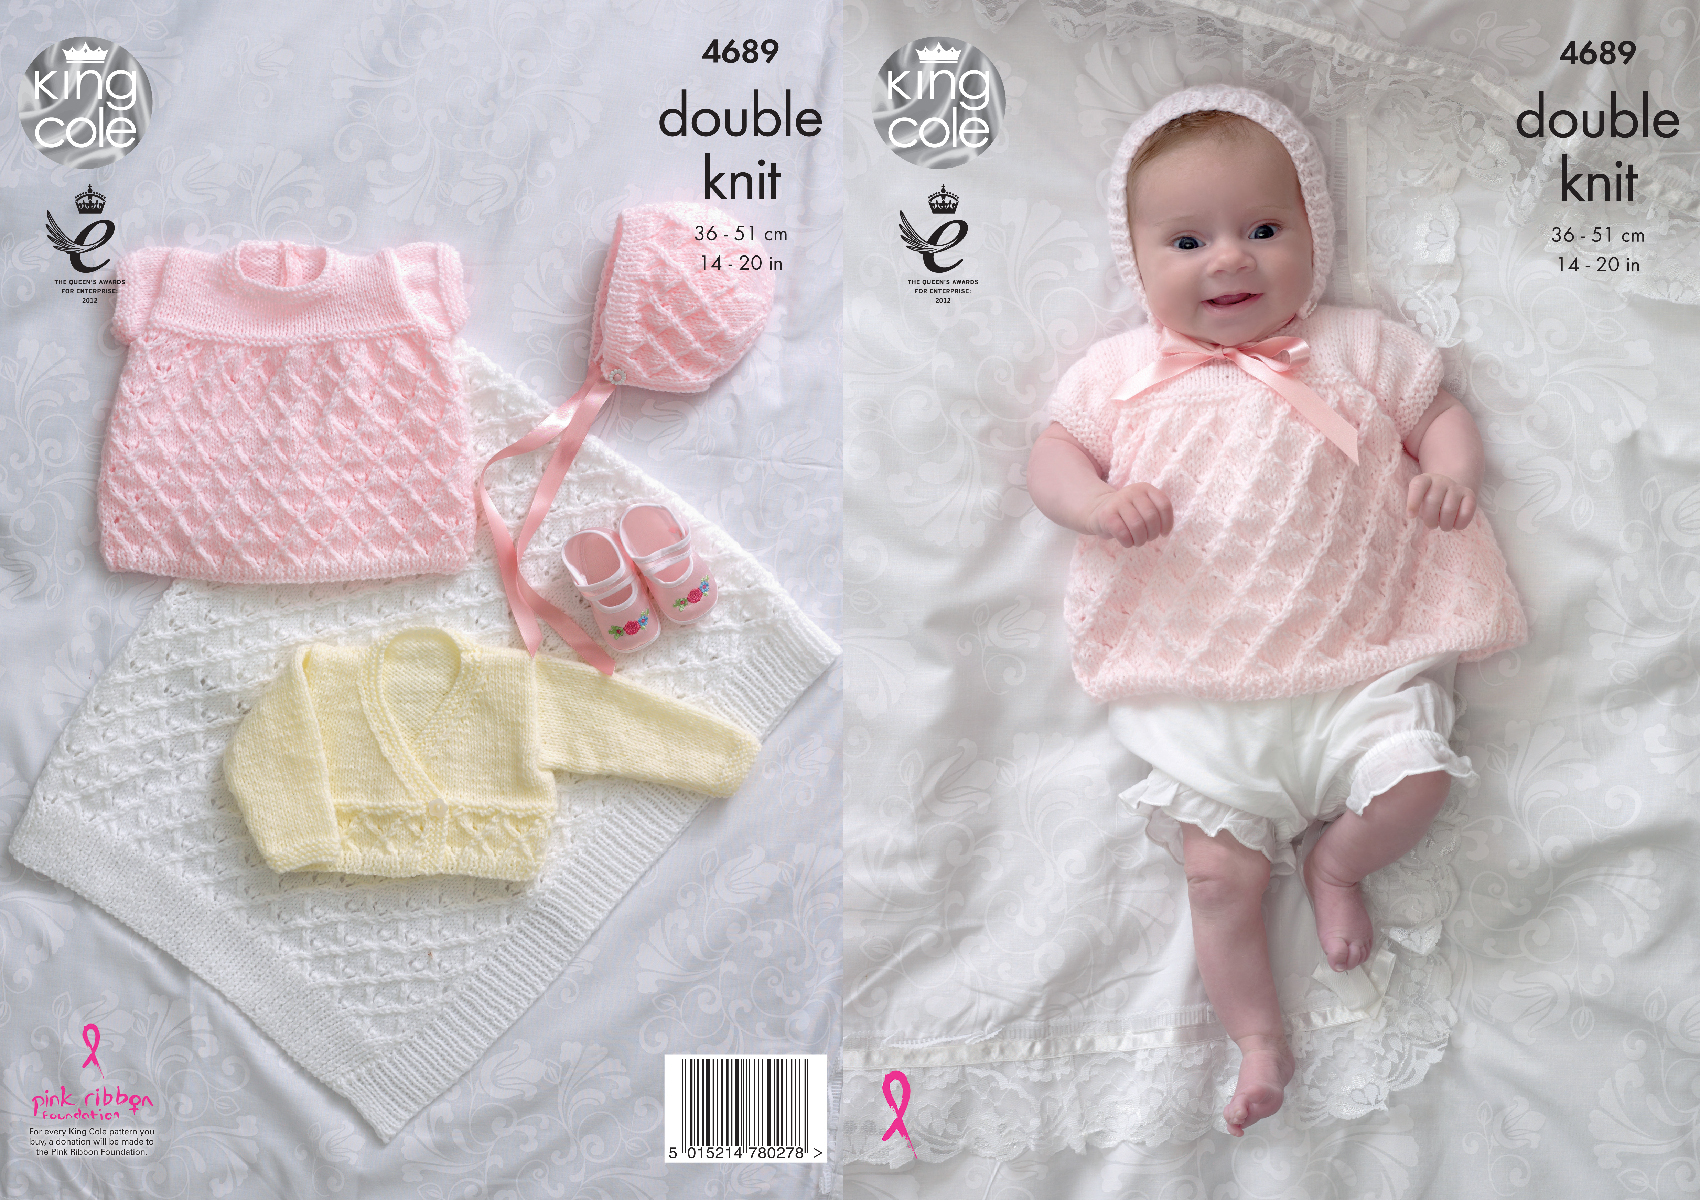 Baby Girl Blanket Knitting Patterns Details About Knitting Pattern Ba Cardigan Angel Top Bonnet Blanket King Cole Dk 4689